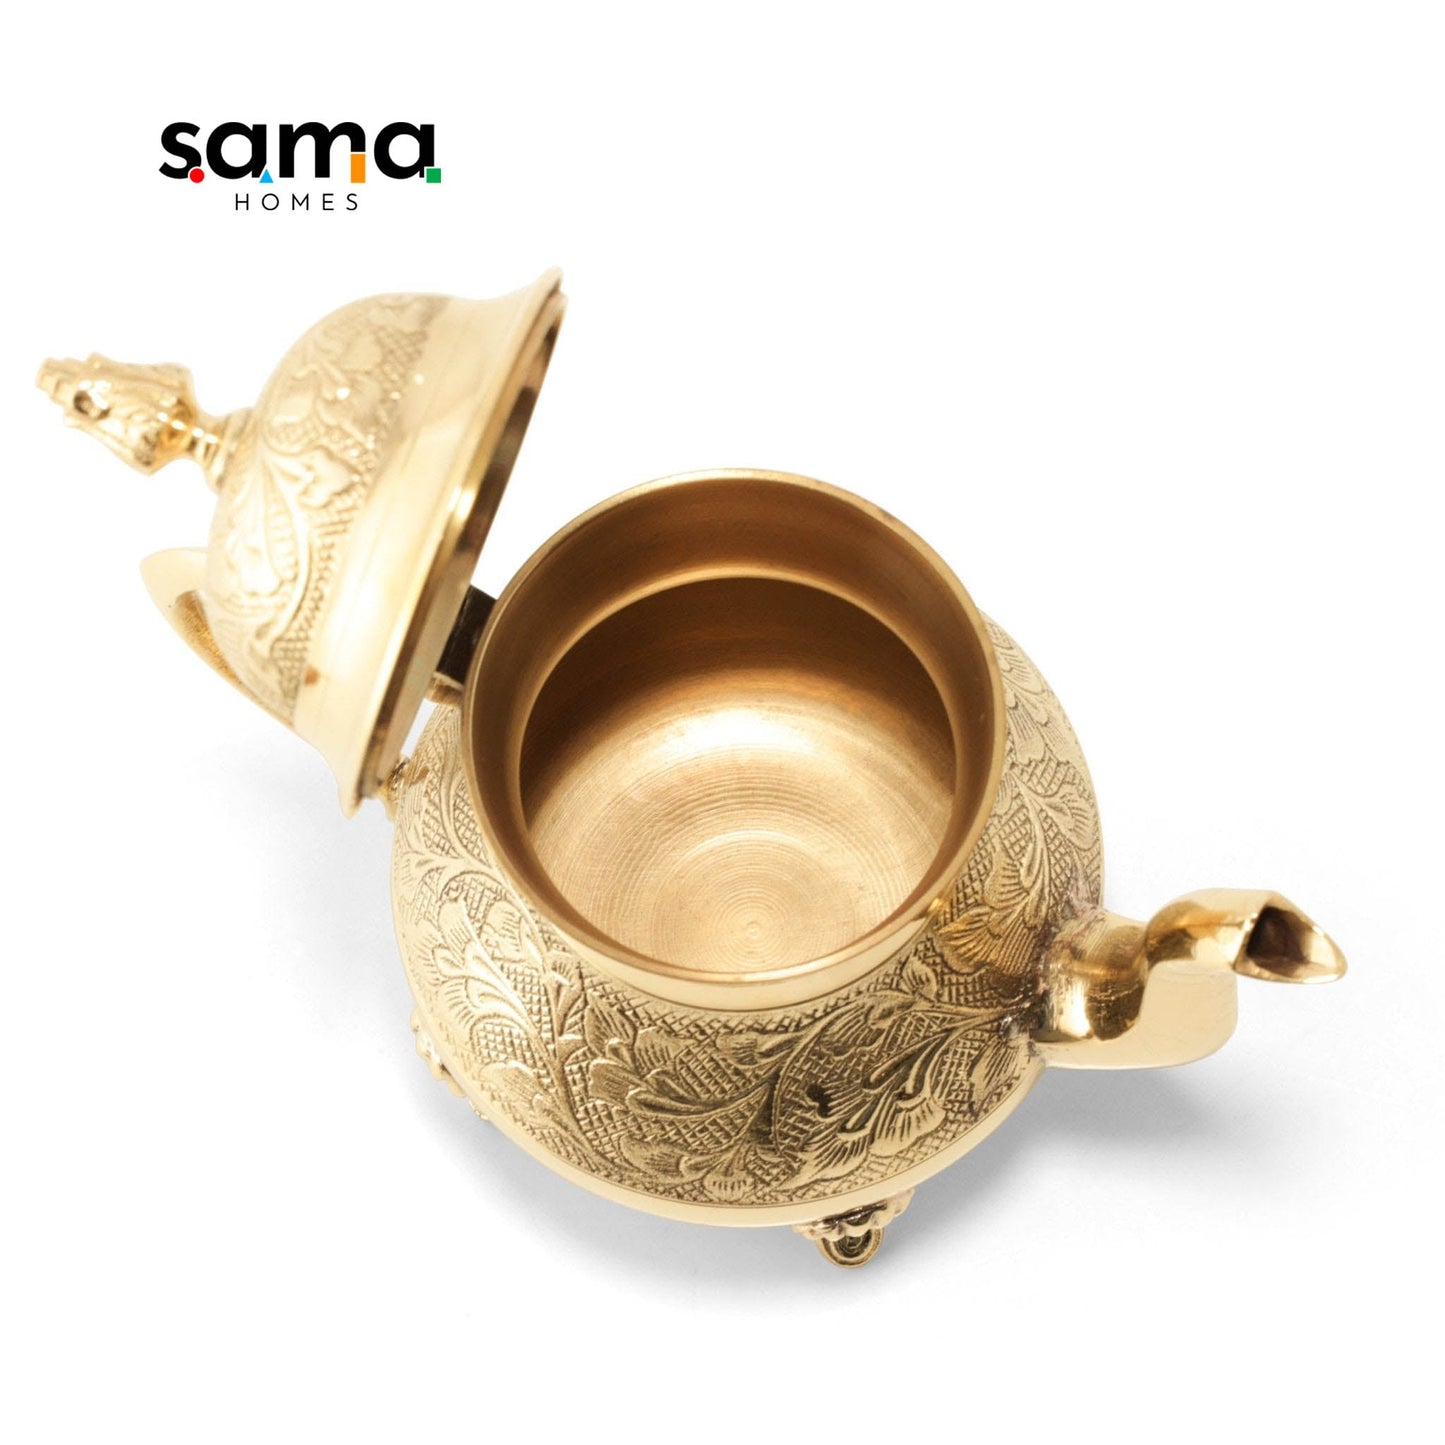 SAMA Homes - brass tea kettle